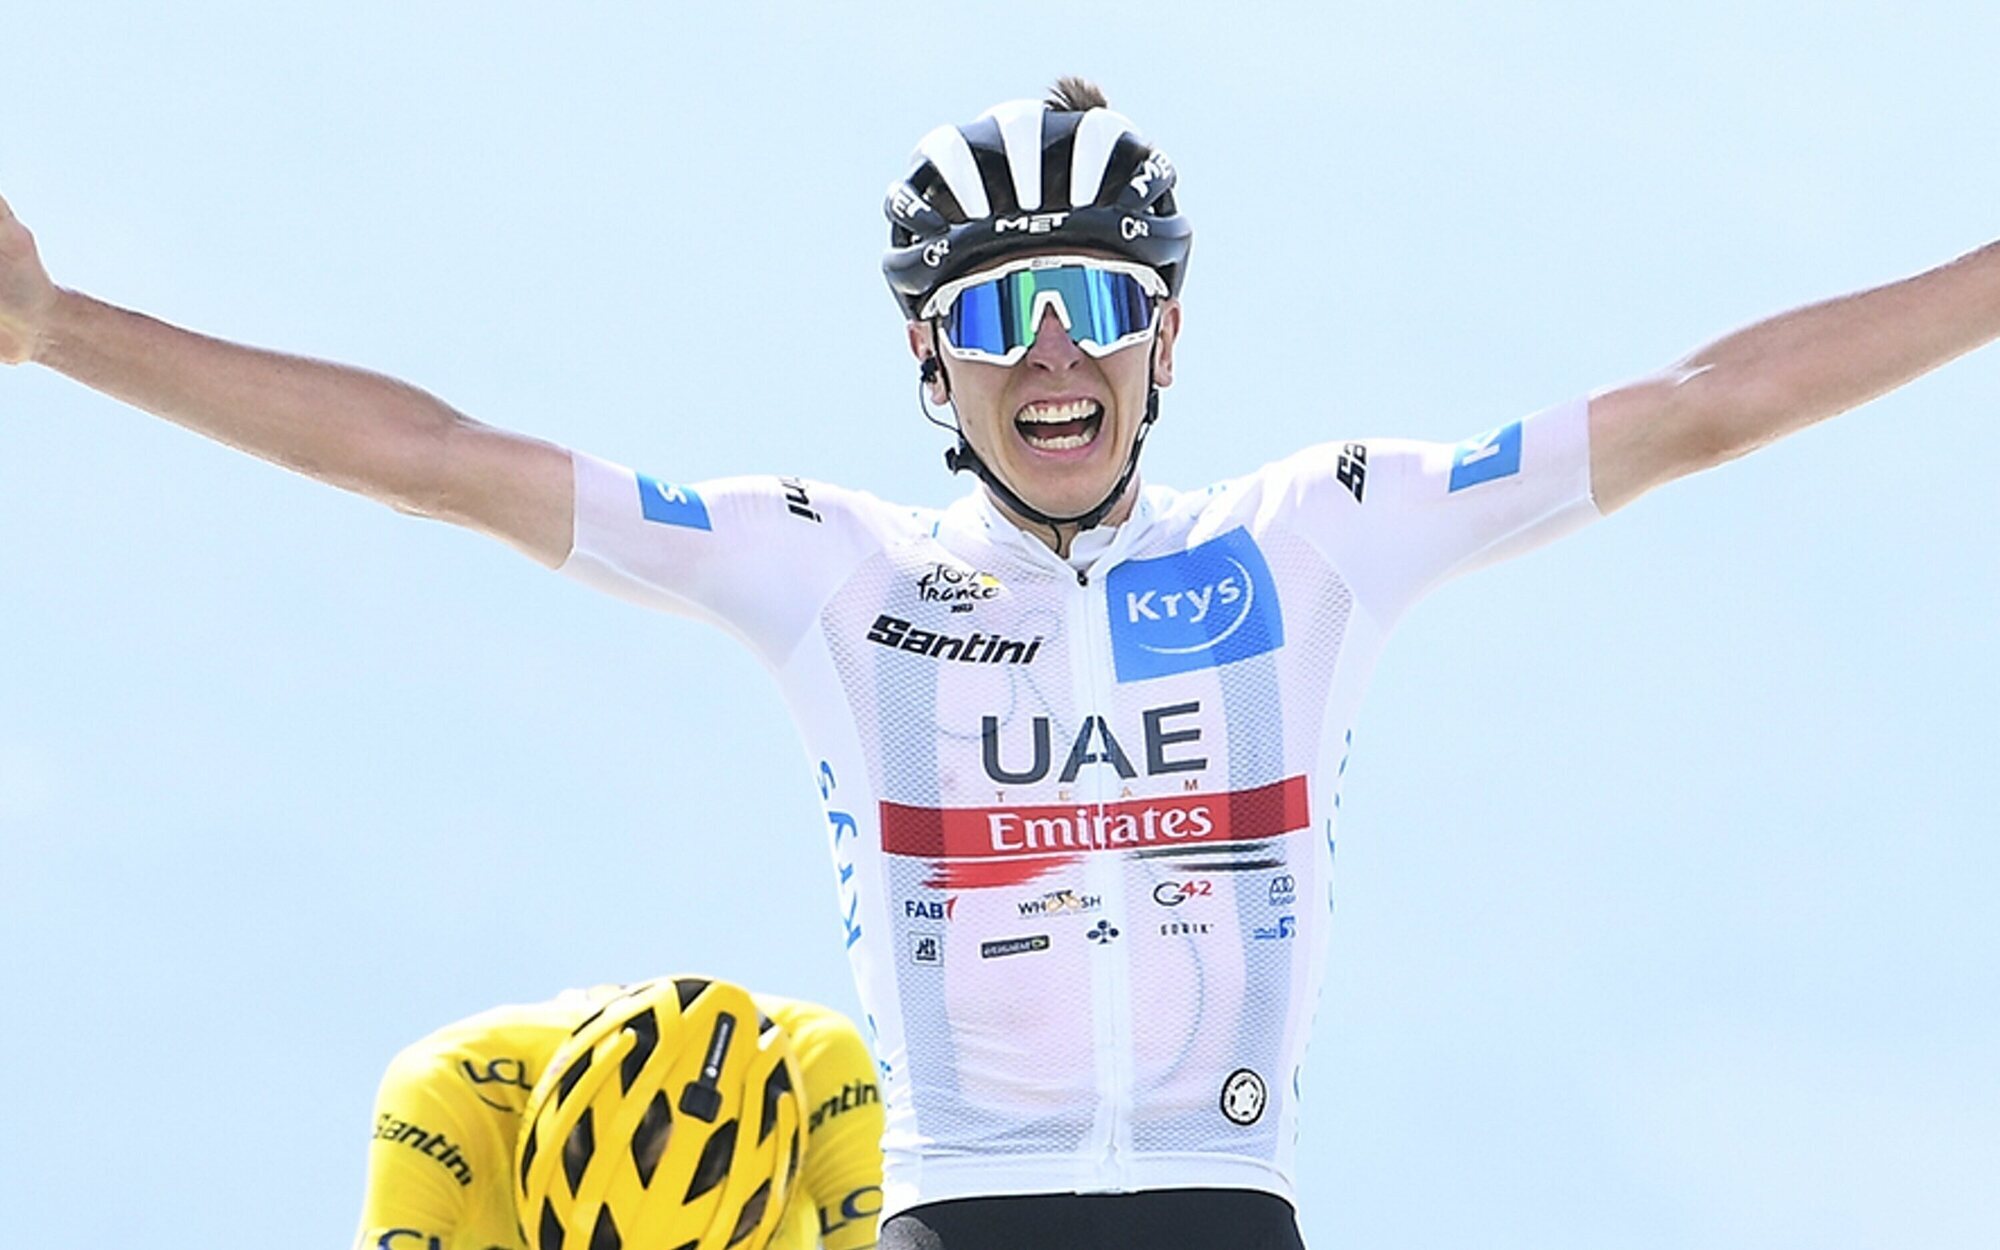 El Tour de Francia (4,9%) consigue el maillot de la victoria mientras Divinity lidera la jornada